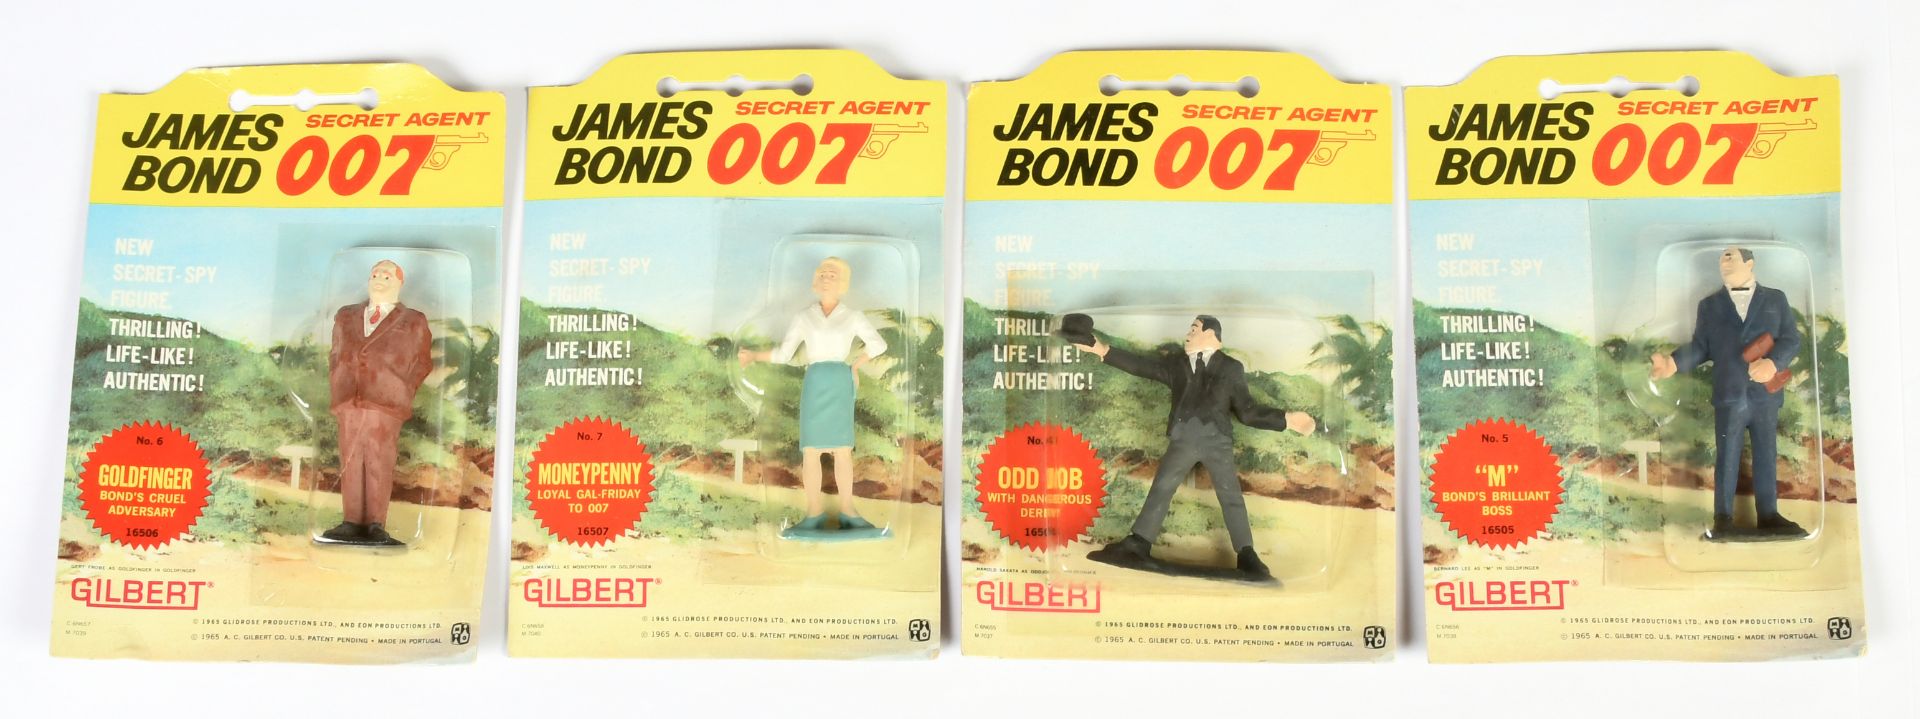 Gilbert James Bond Movie Characters x 4